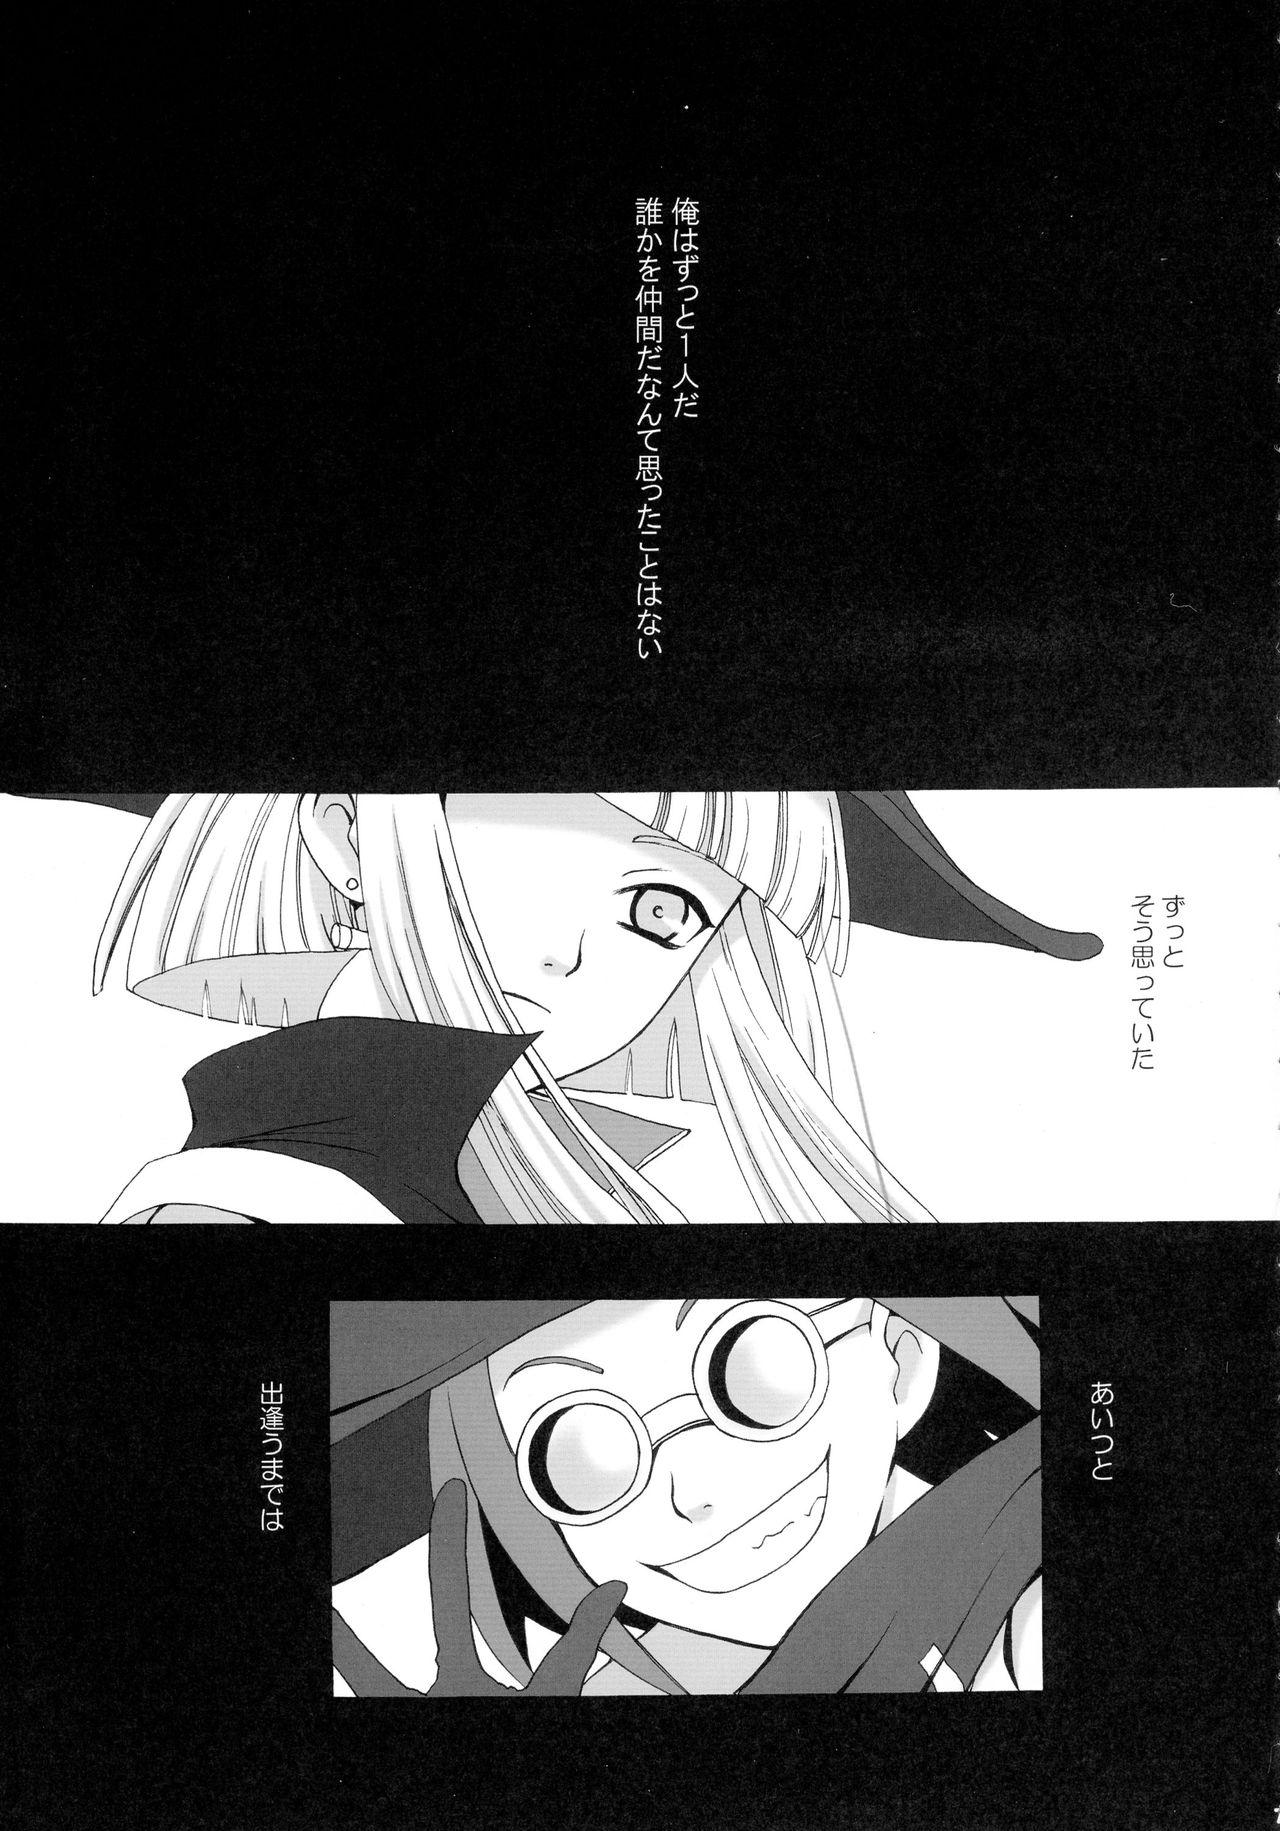 Blackdick SMILE FOR ME - Mahou shoujo tai arusu Porno 18 - Page 7